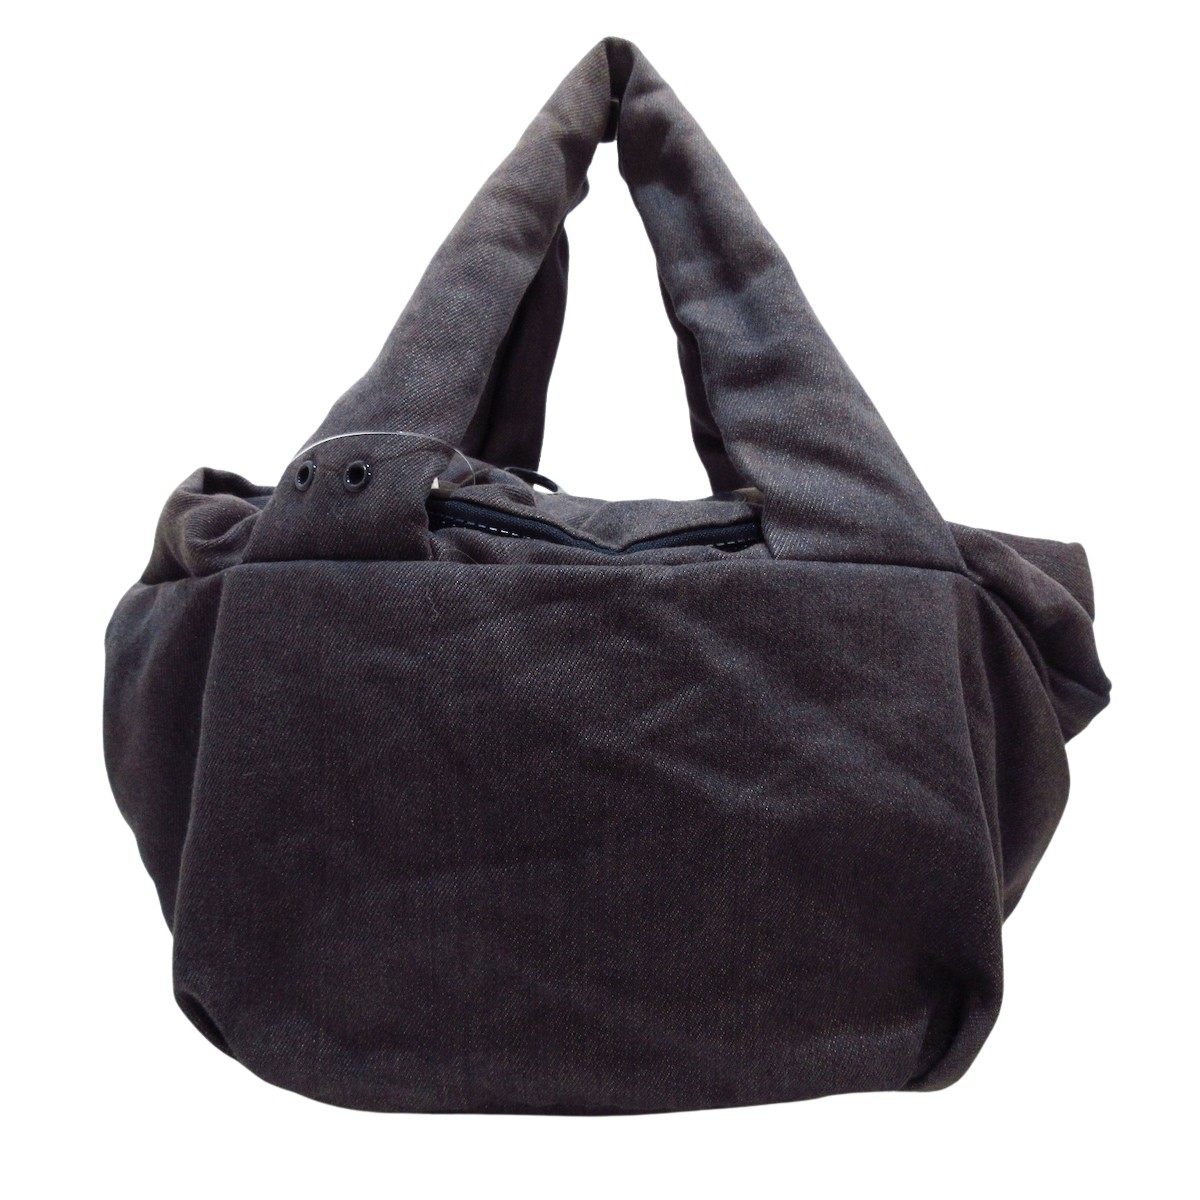 Denim Joy Rider Handbag with Practical Design